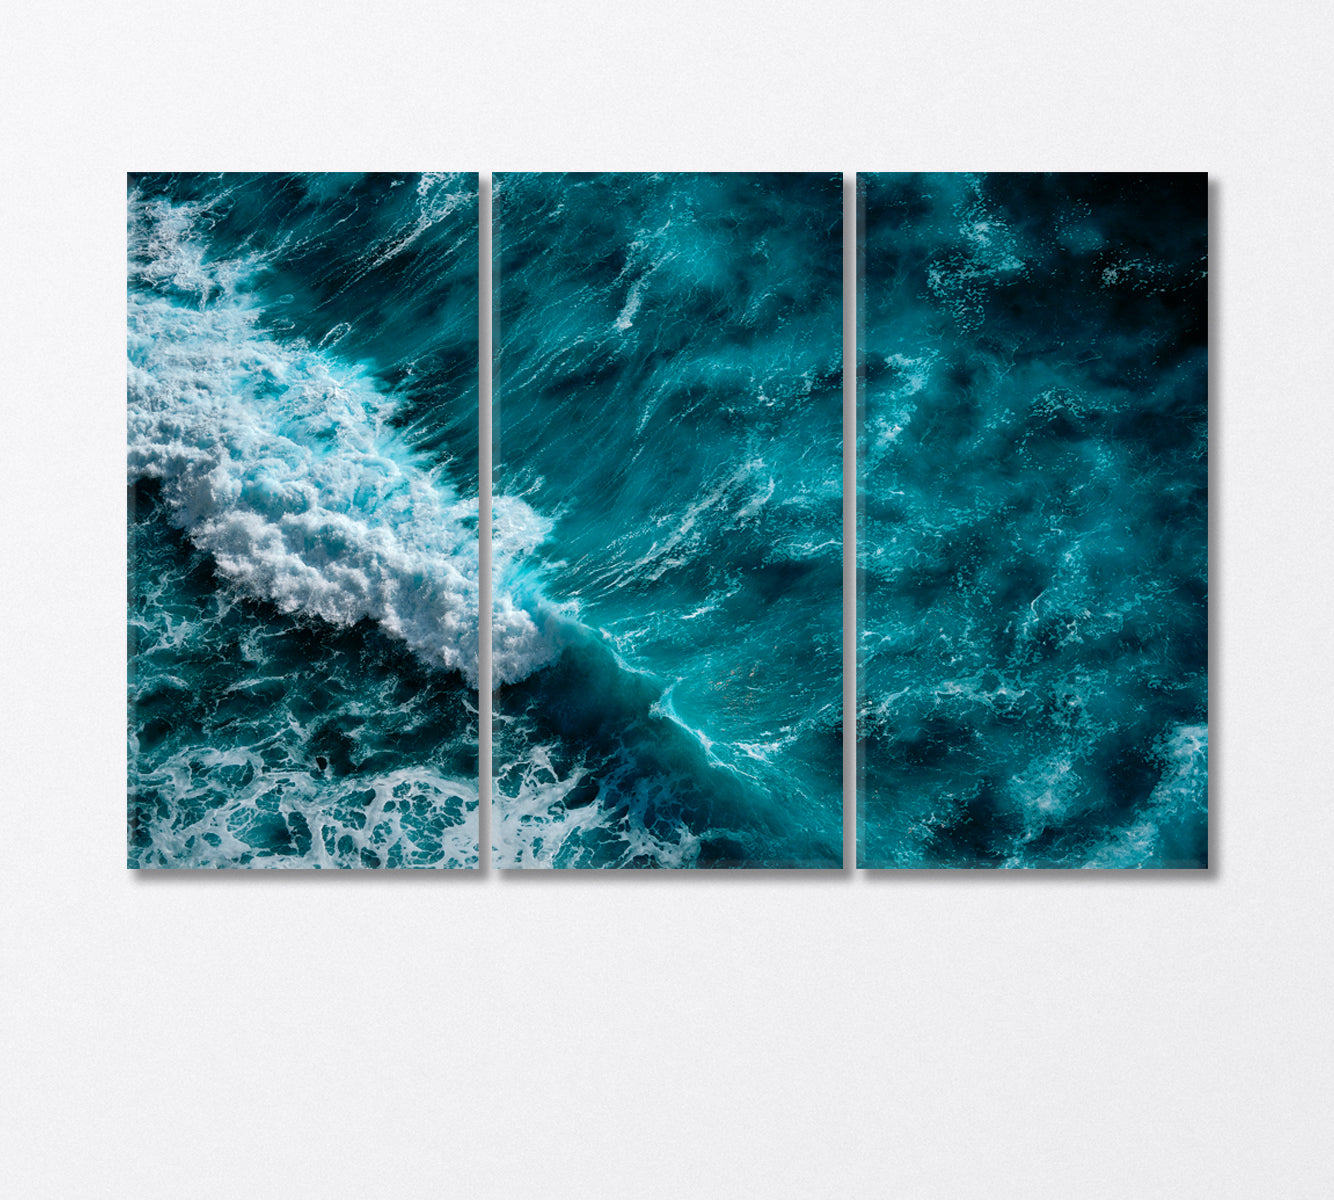 Seething Foamy Ocean Waves Canvas Print-Canvas Print-CetArt-3 Panels-36x24 inches-CetArt